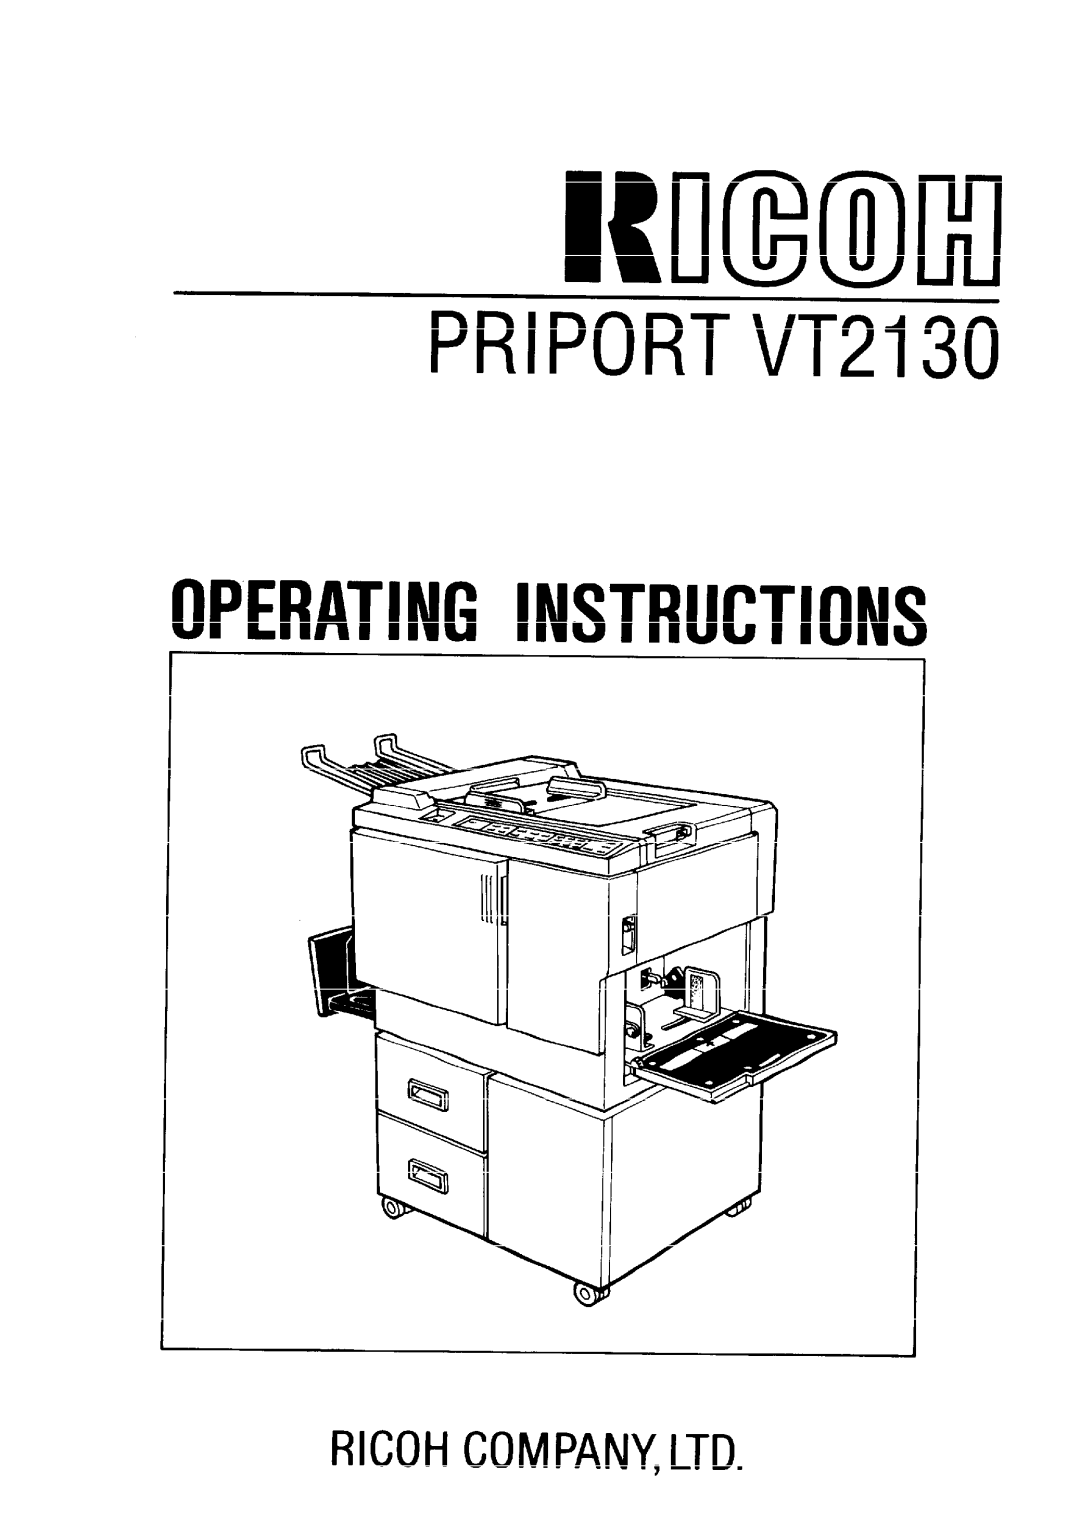 Ricoh PRIPORT VT2130 manual PRIPORTVT2130, Iiigom, Operatinginstructions 